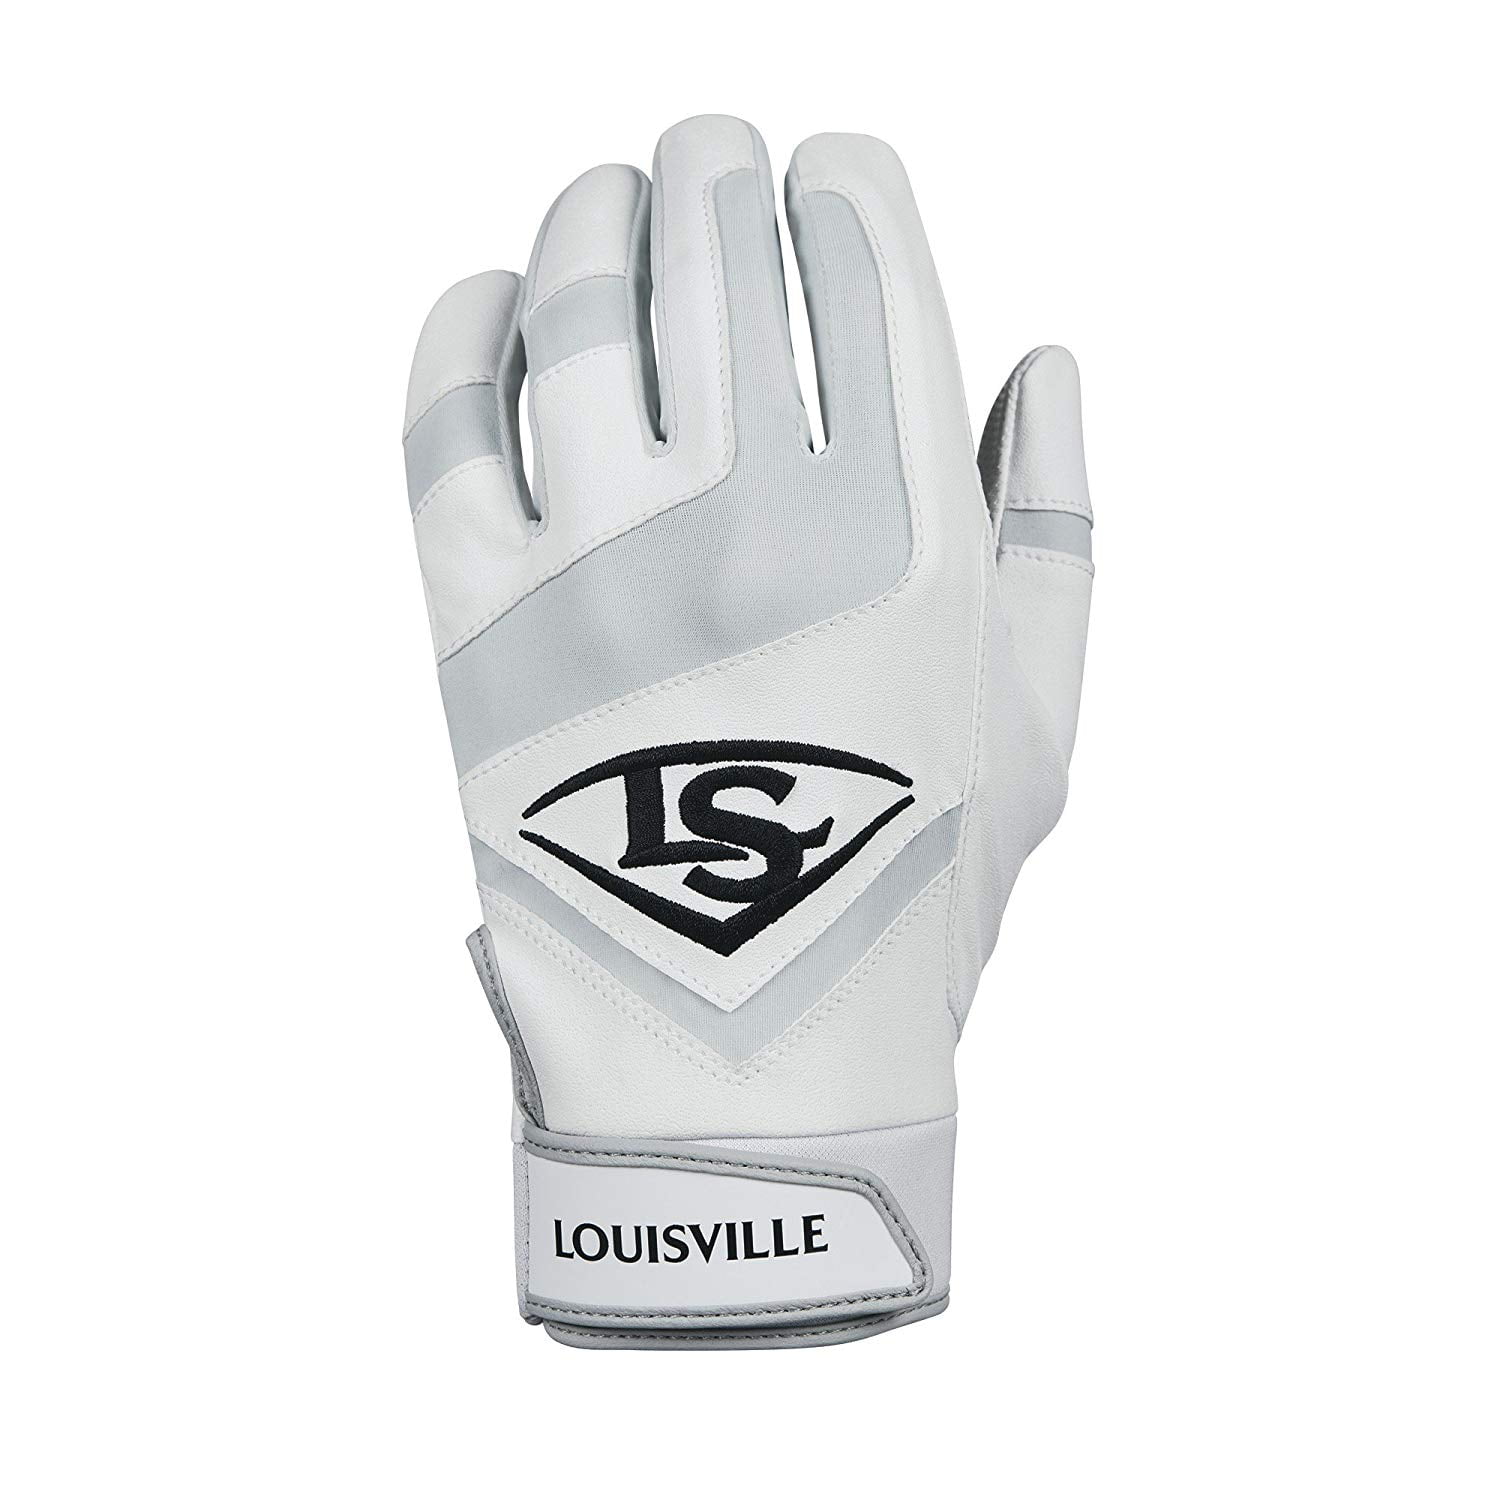 Louisville Slugger Adult Genuine Batting Gloves 